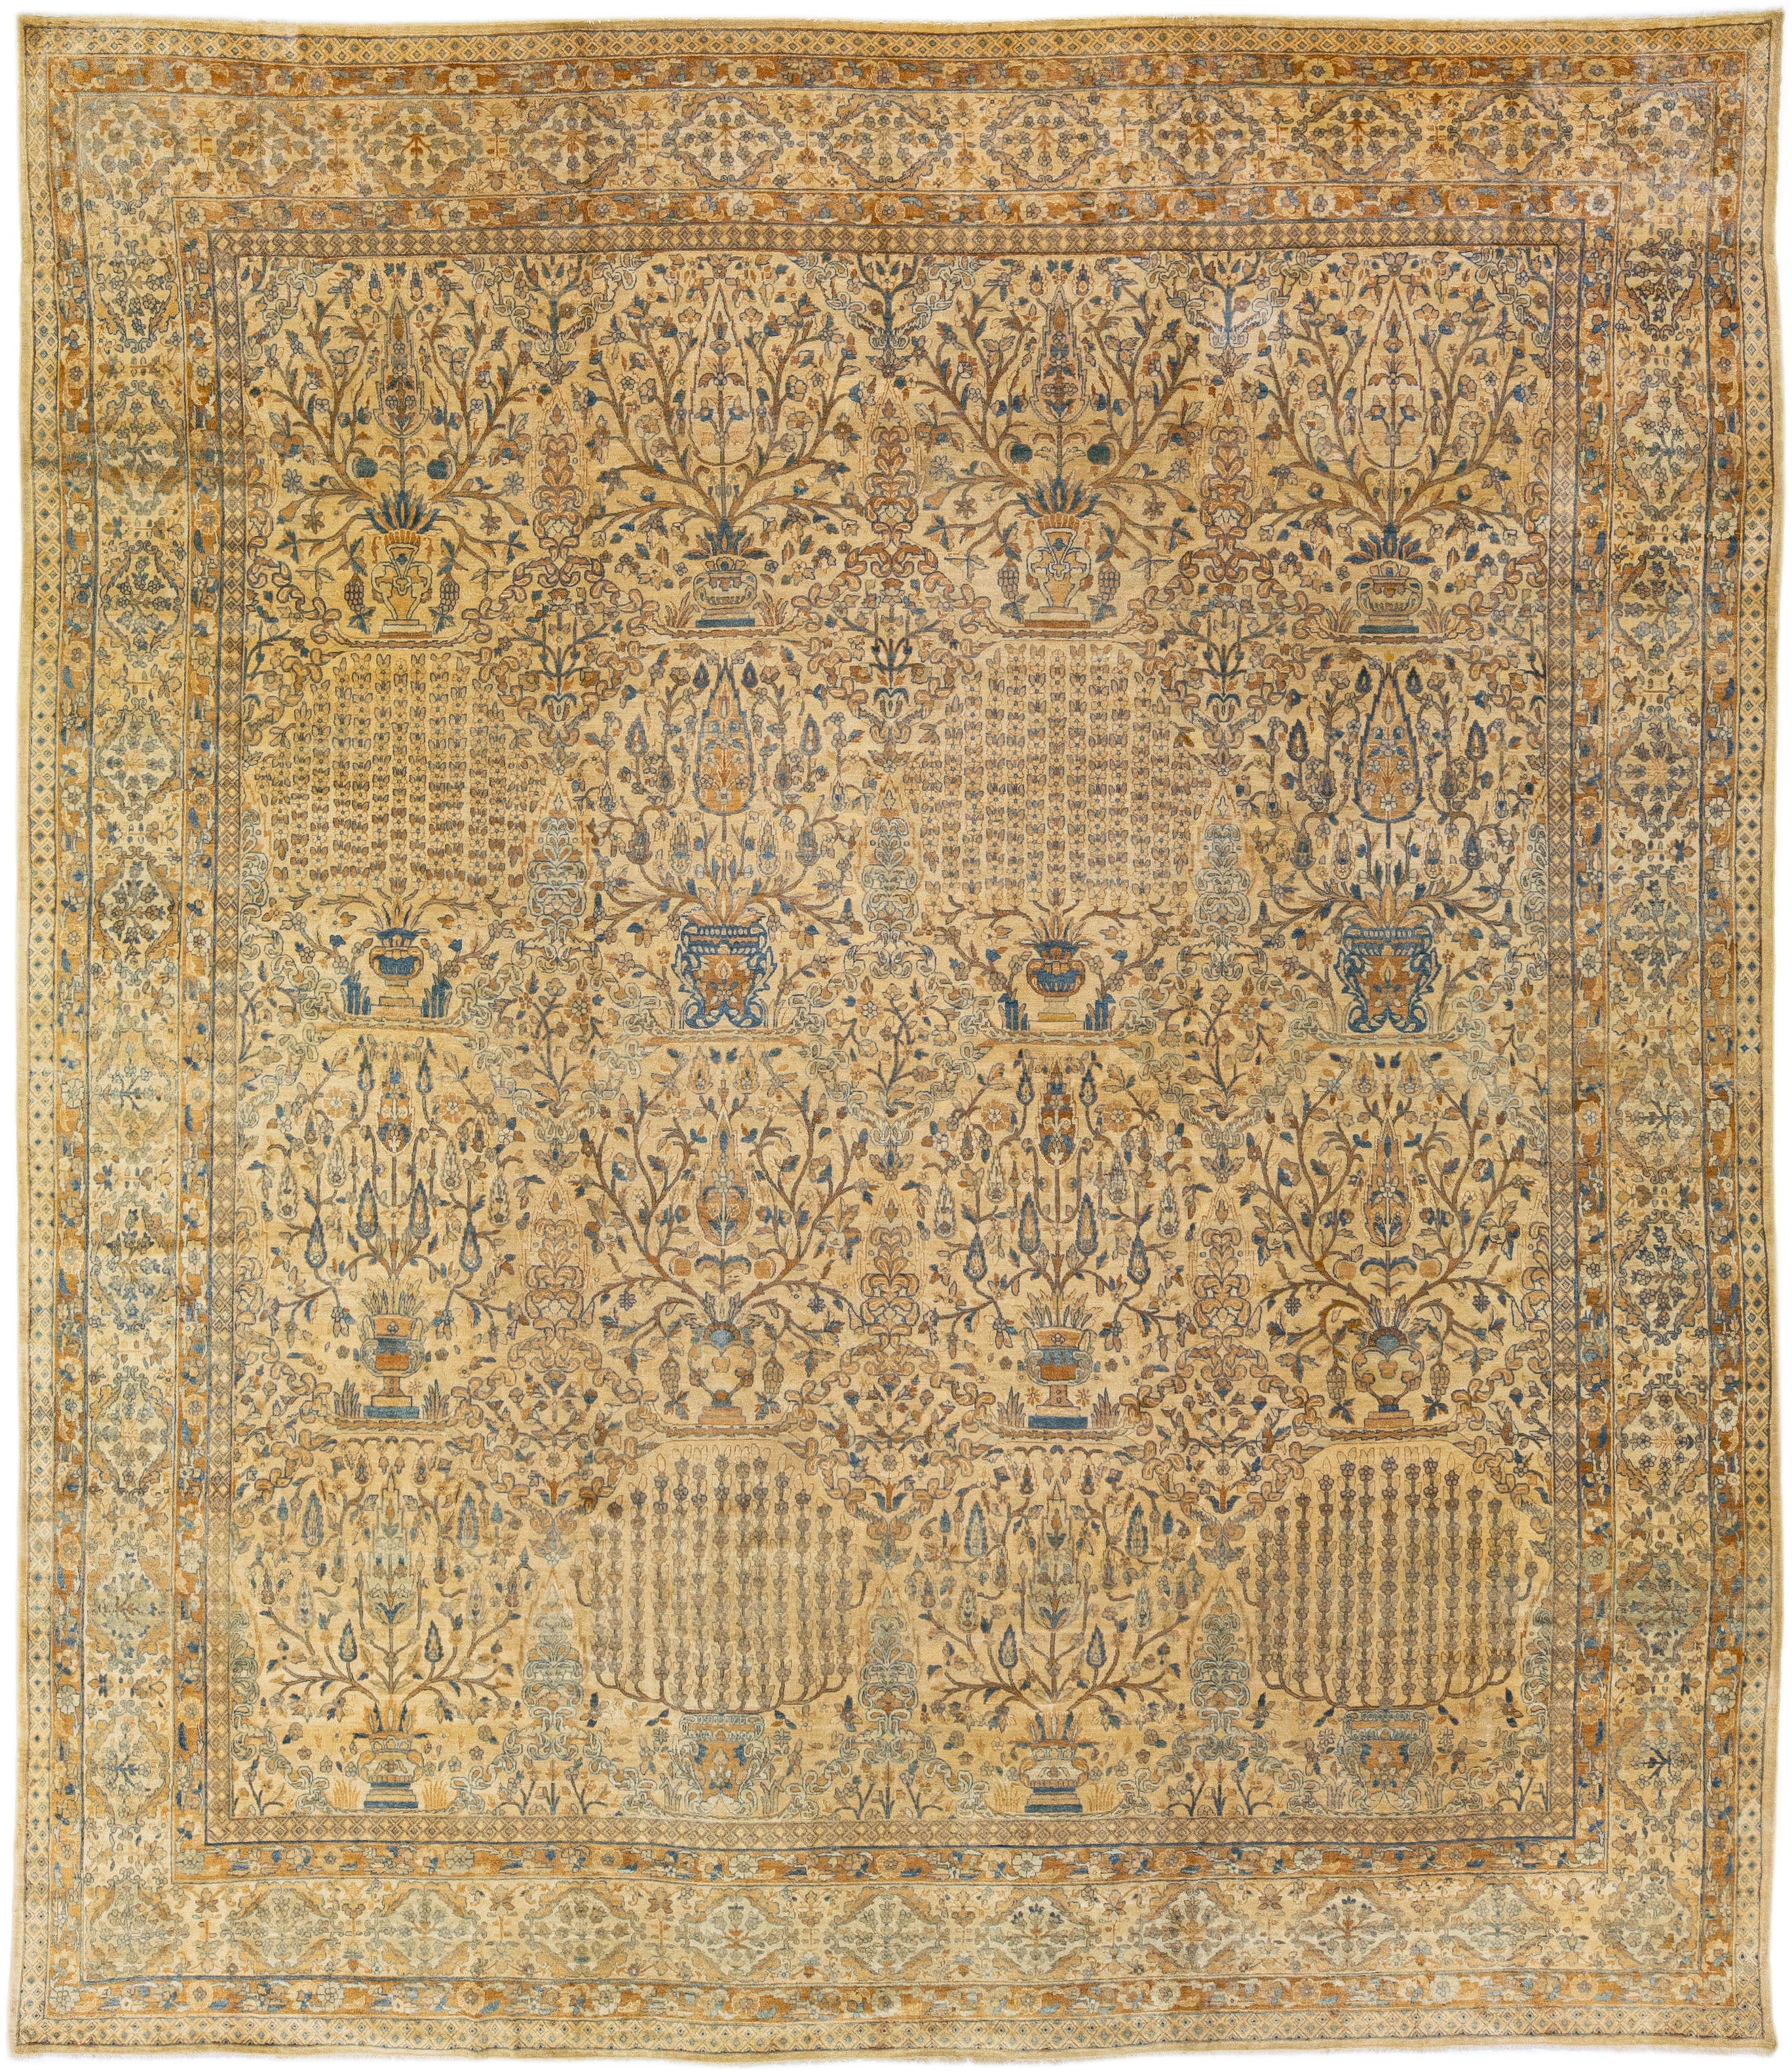 Antique Persian Kerman Handmade All-Over Floral Goldenrod Wool Rug For Sale